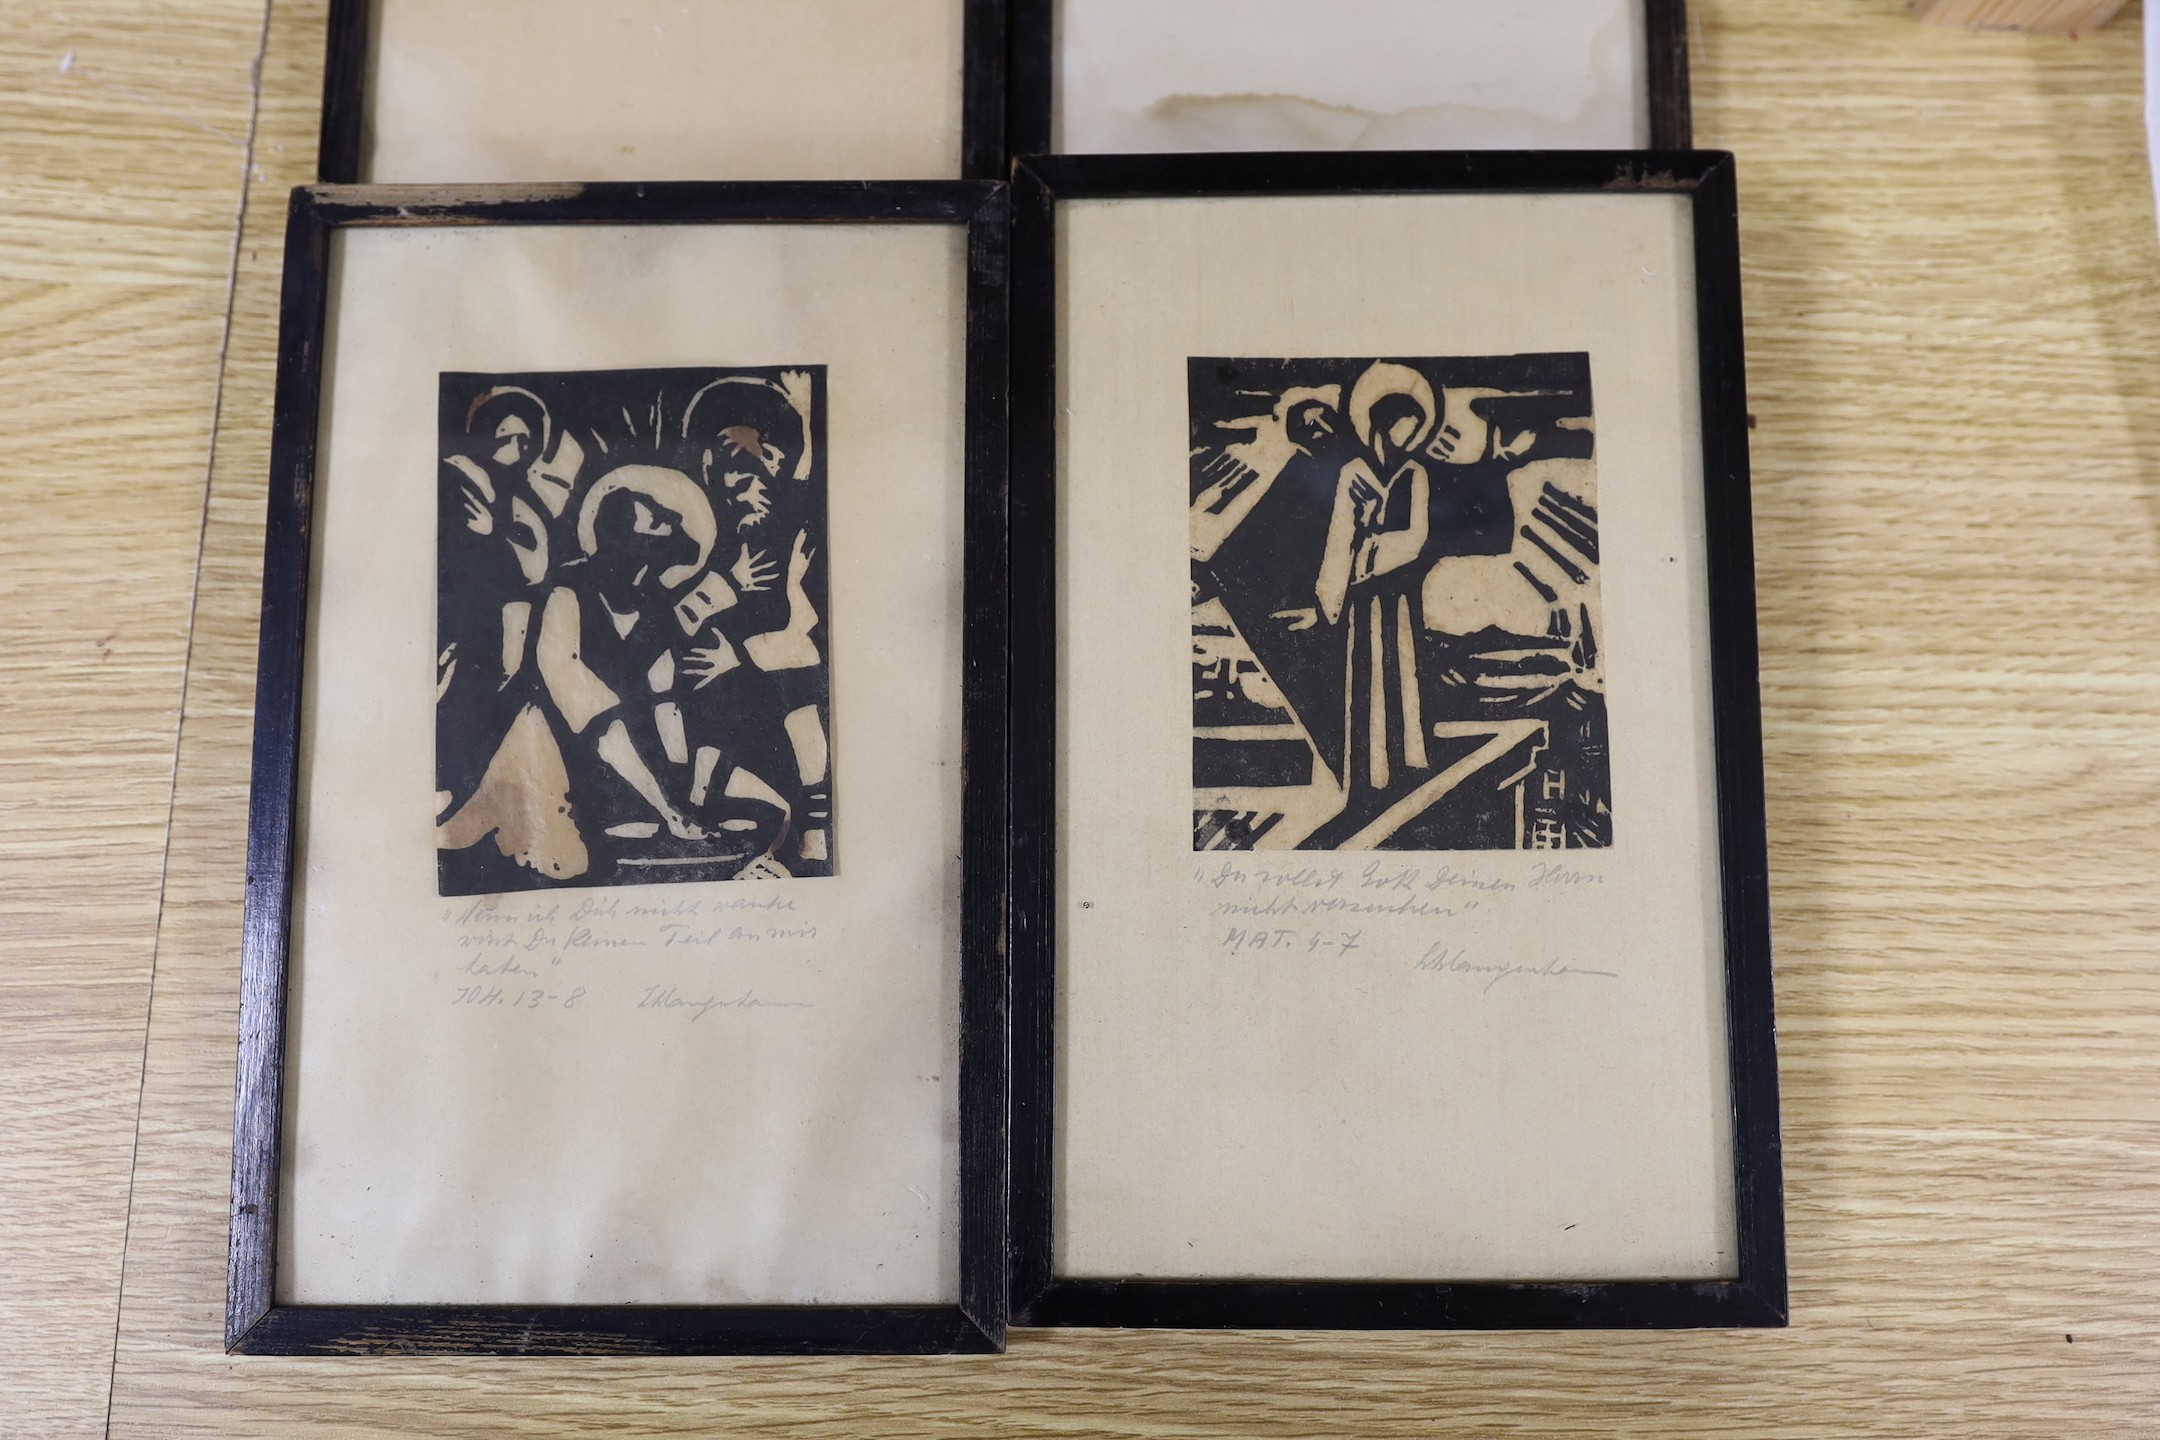 A group of six German woodblock prints, titled biblical scenes, frames 24 x 15cm